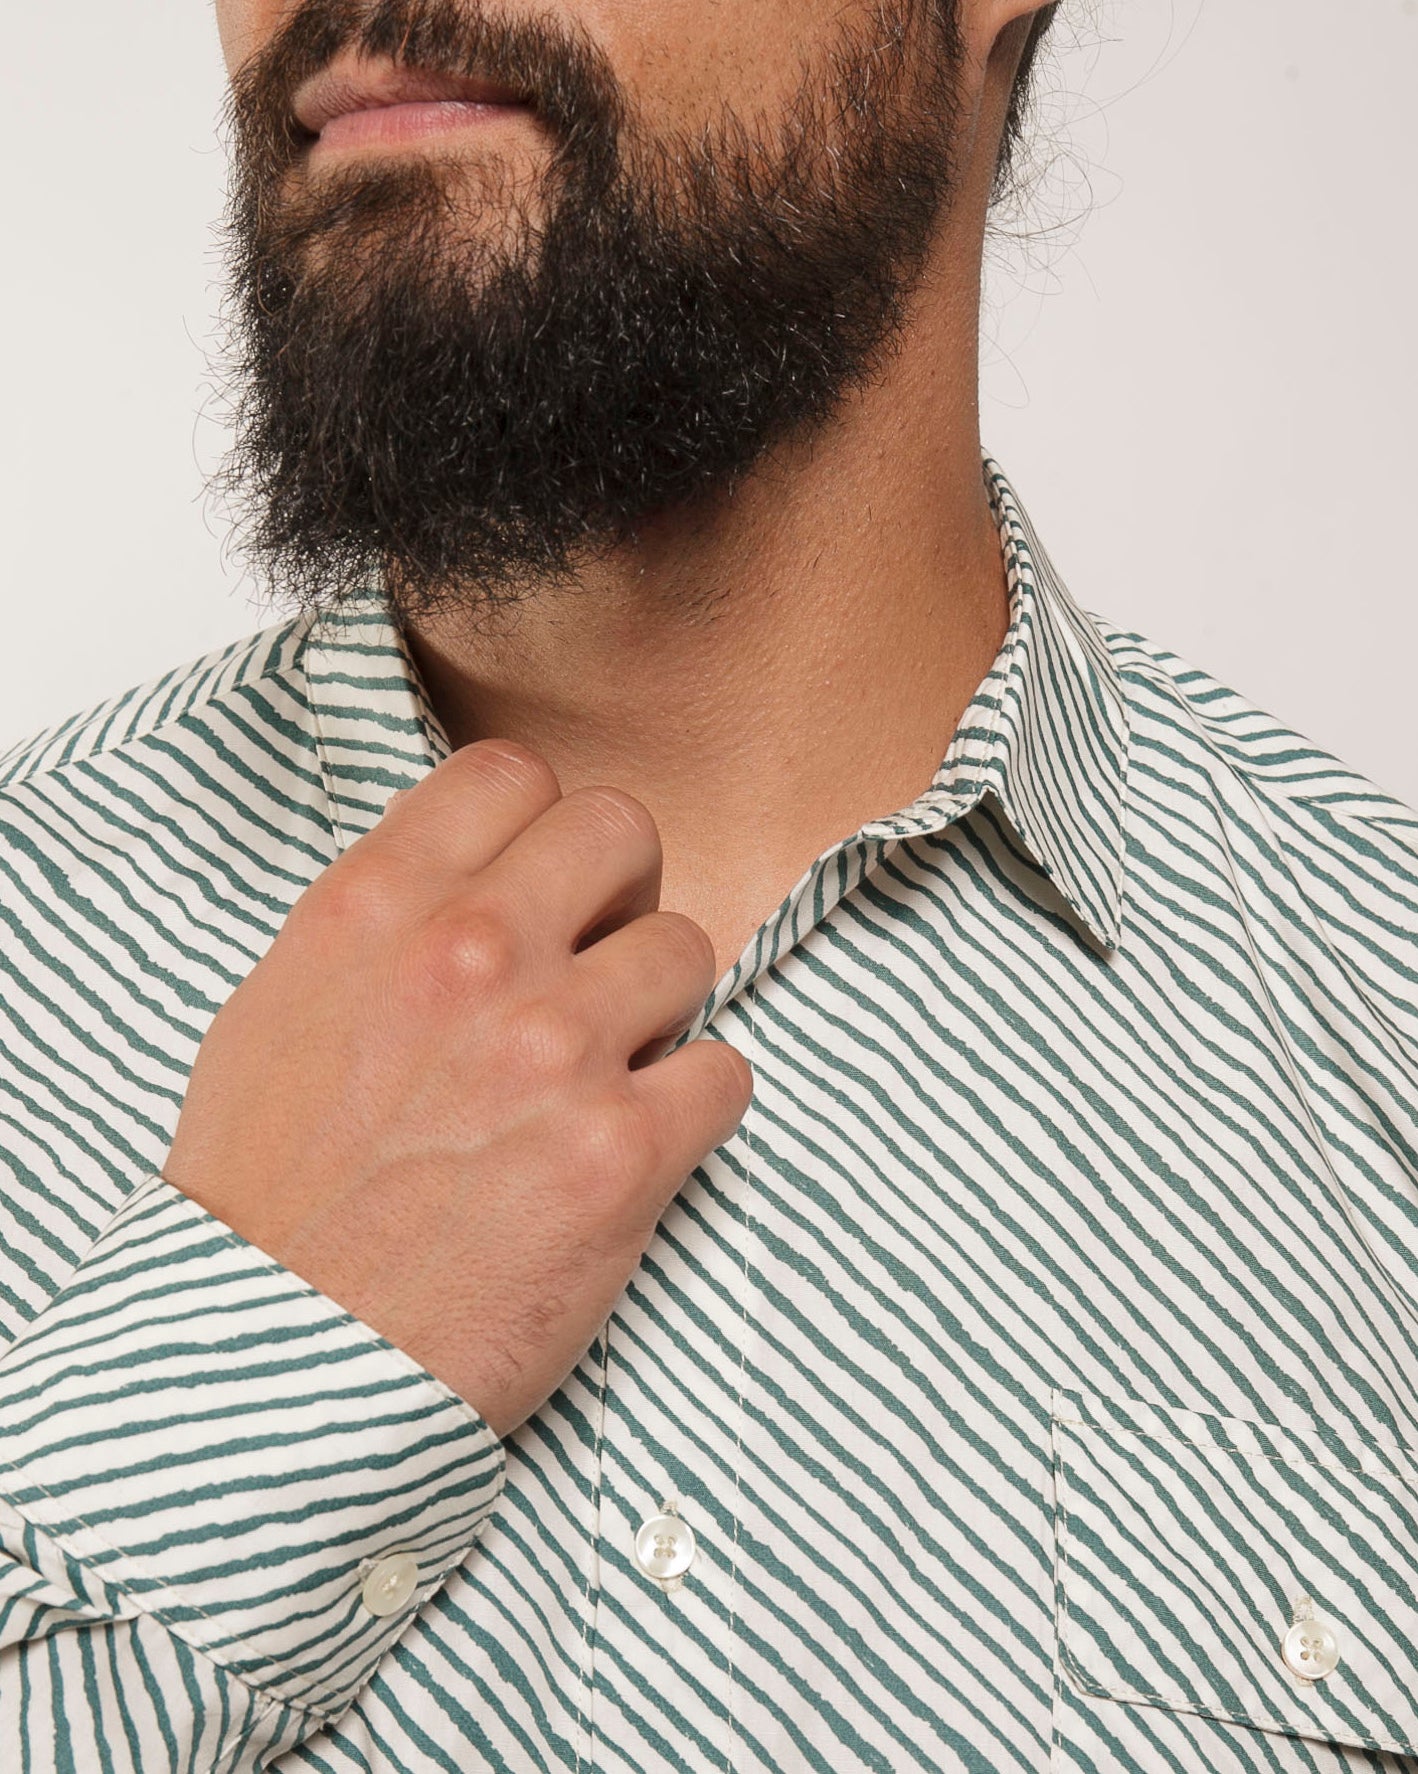 Long Sleeve Neuwirth Shirt | Between The Lines